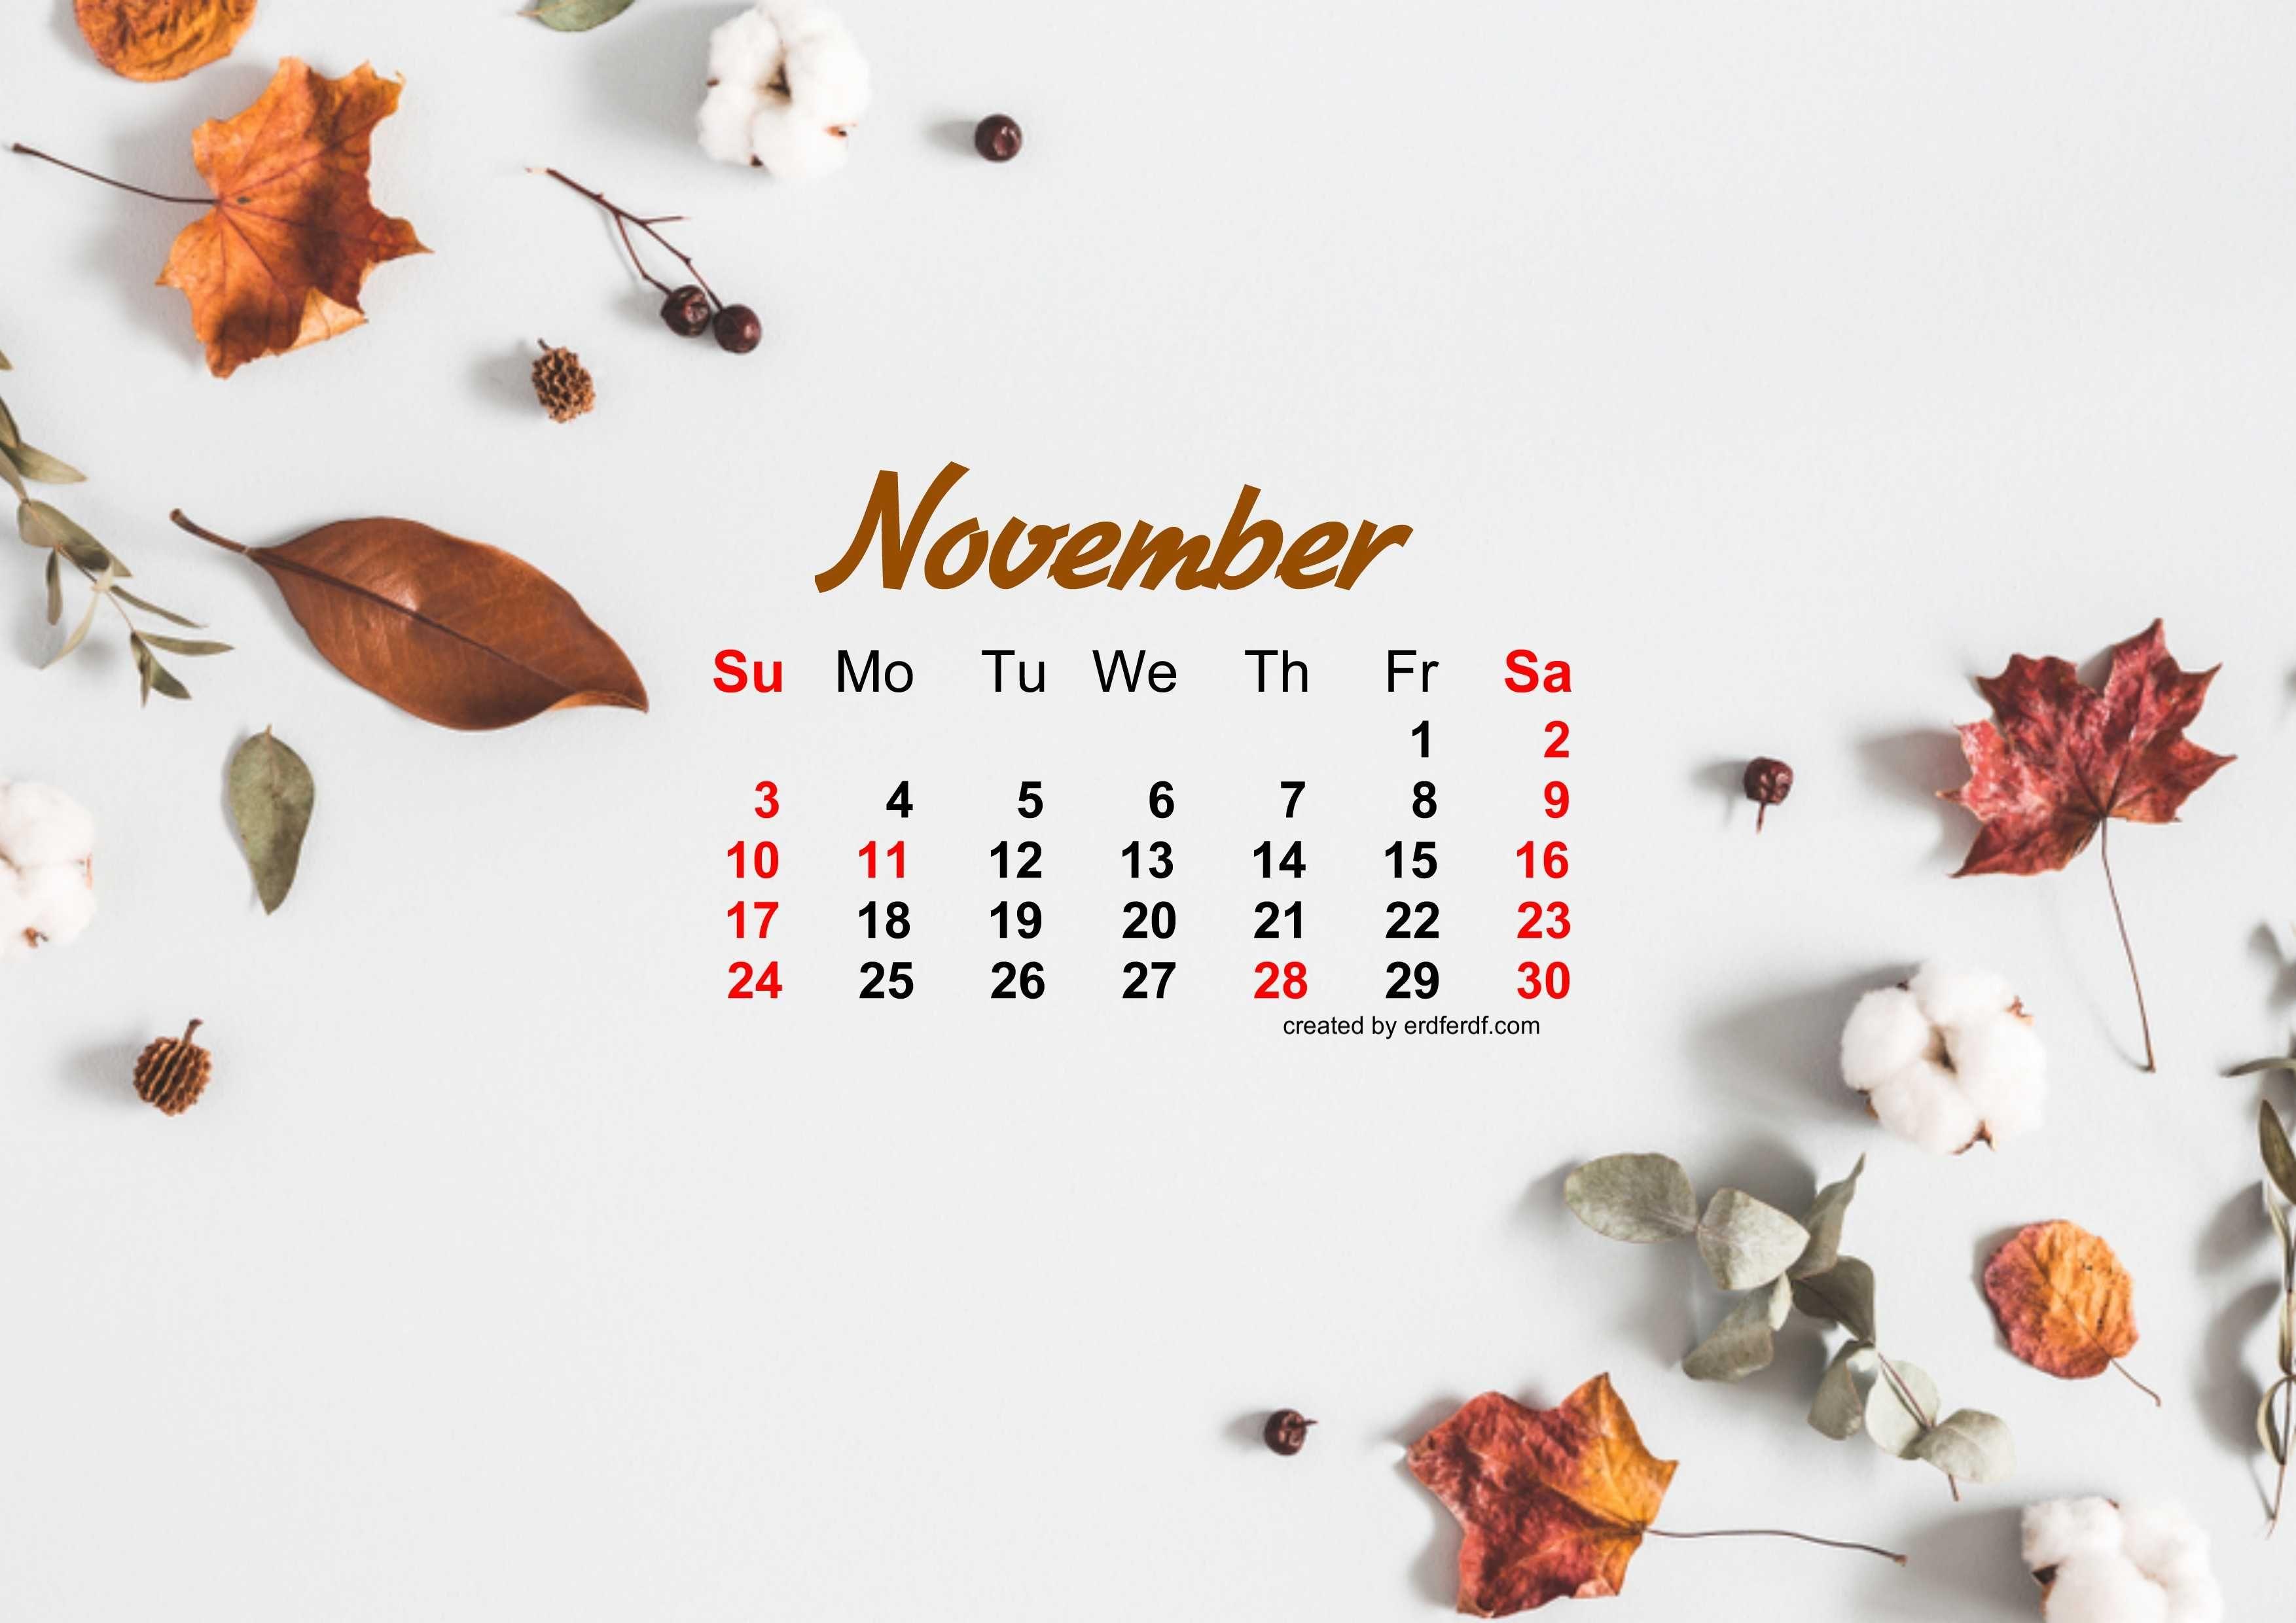 November 2019 Calendar Wallpapers - Top Free November 2019 Calendar